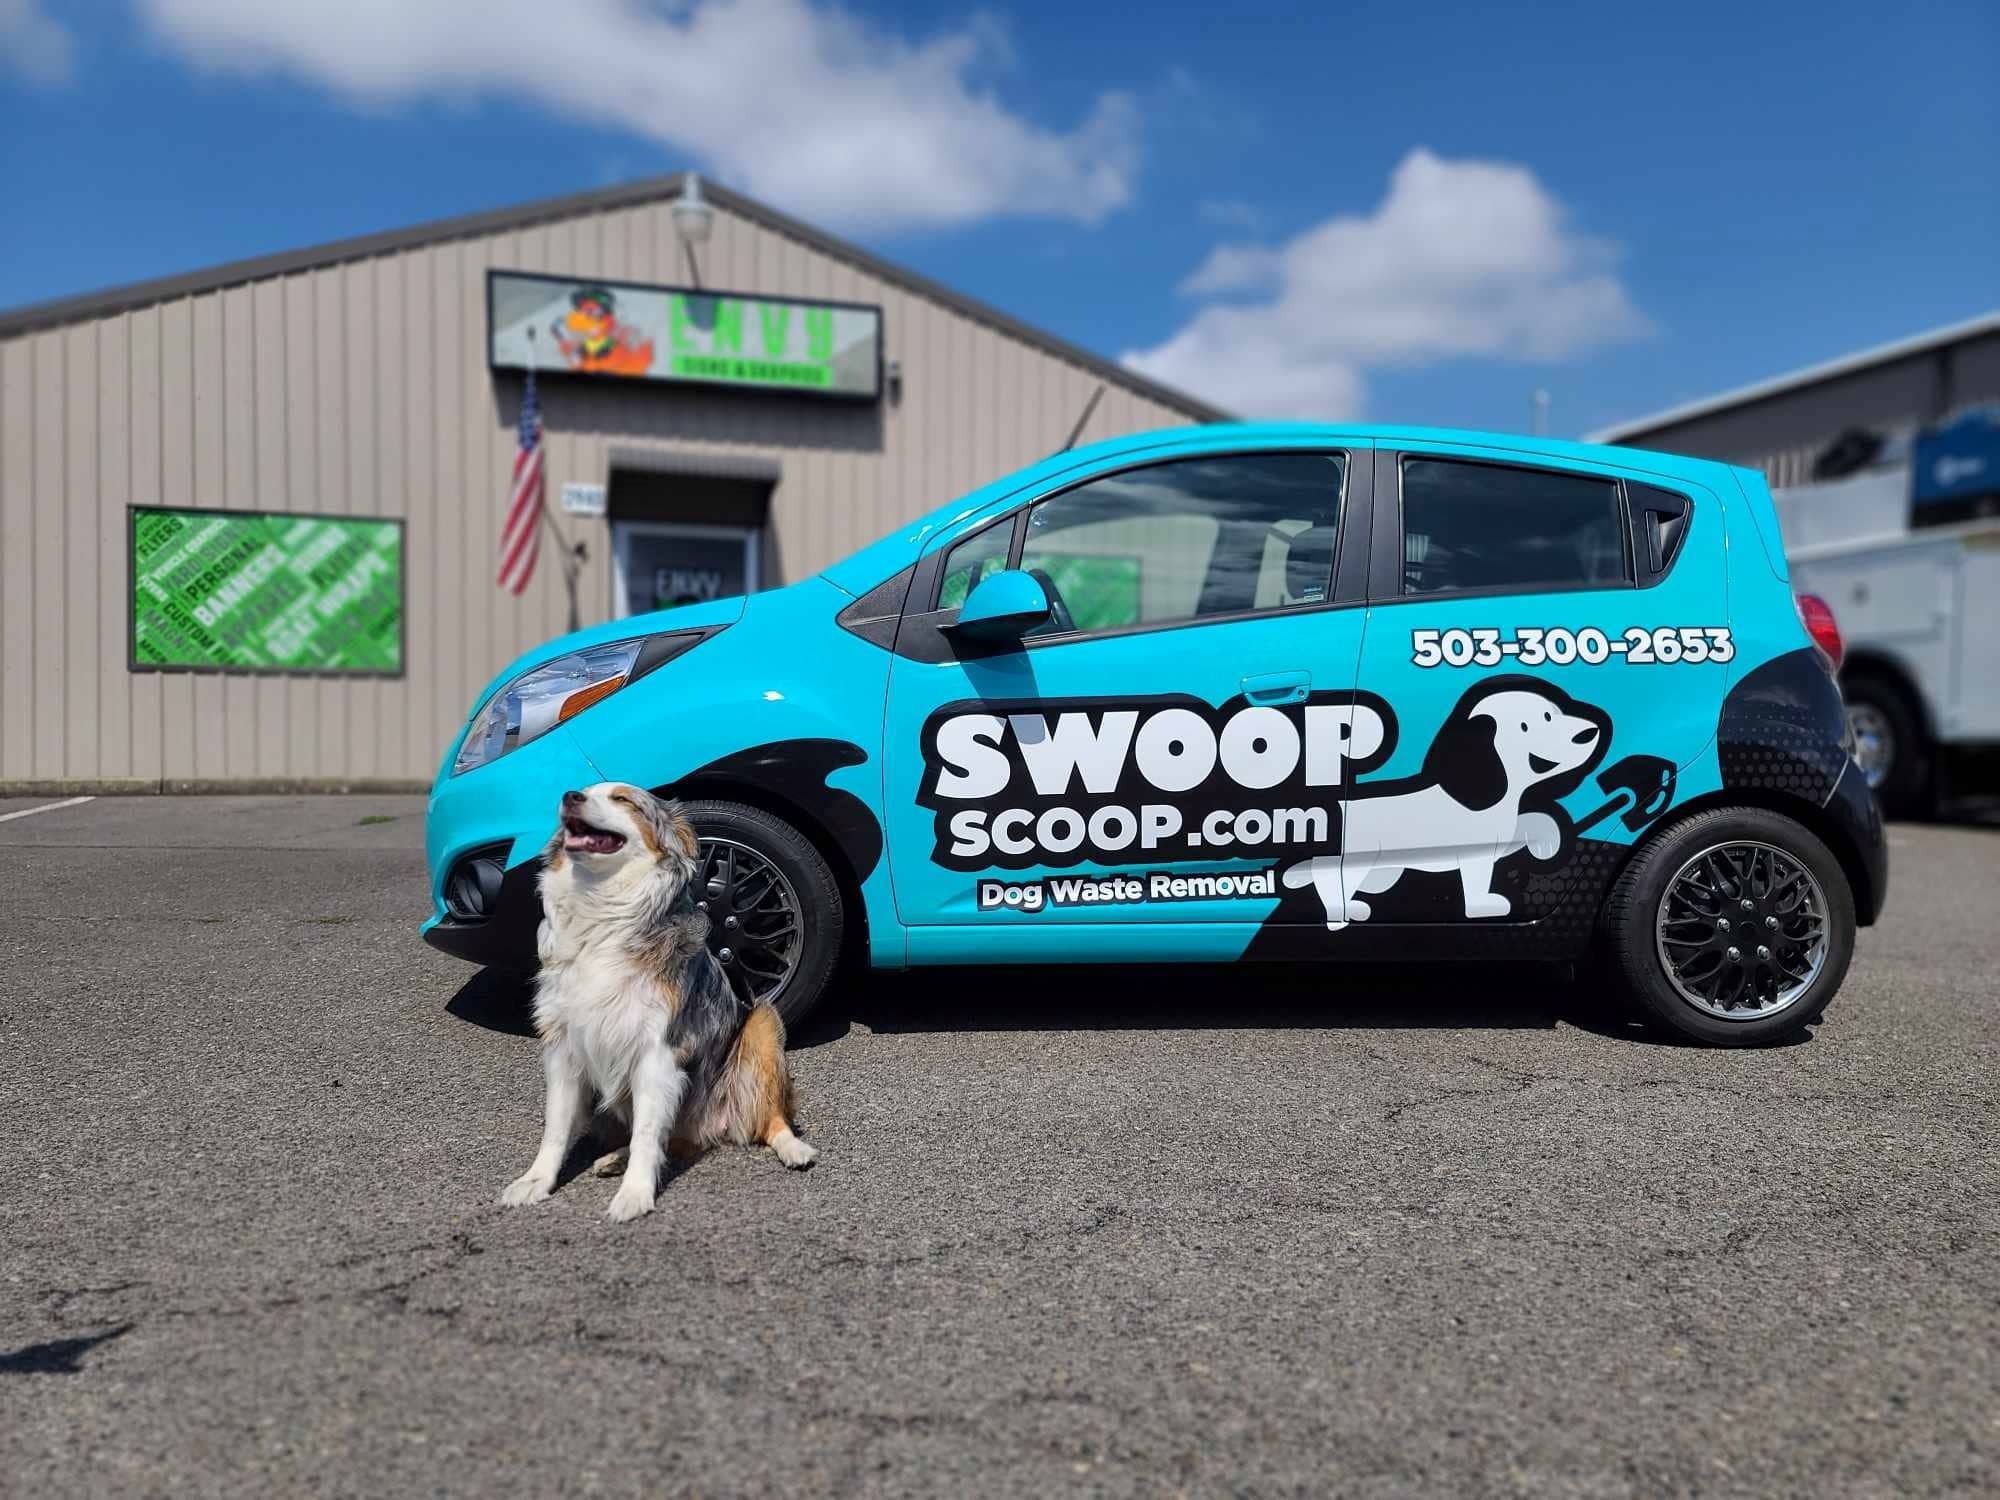 Swoop Scoop Dog Waste removal car parked in a Salem, OR parking lot.